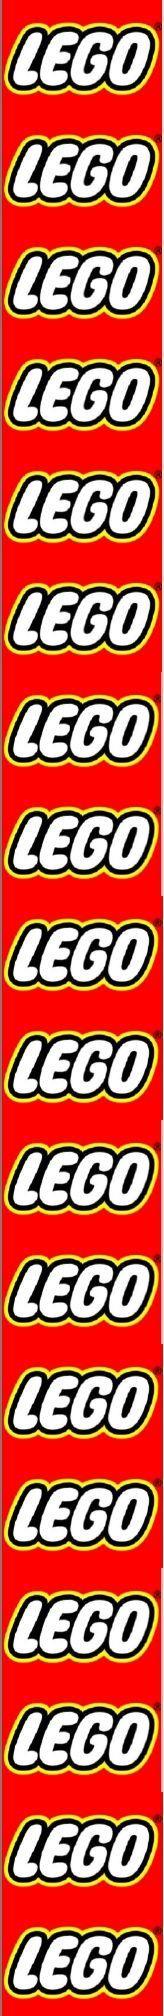 Printable LEGO Logo - Best lego logo image. Illustrations, Dibujo, Typography